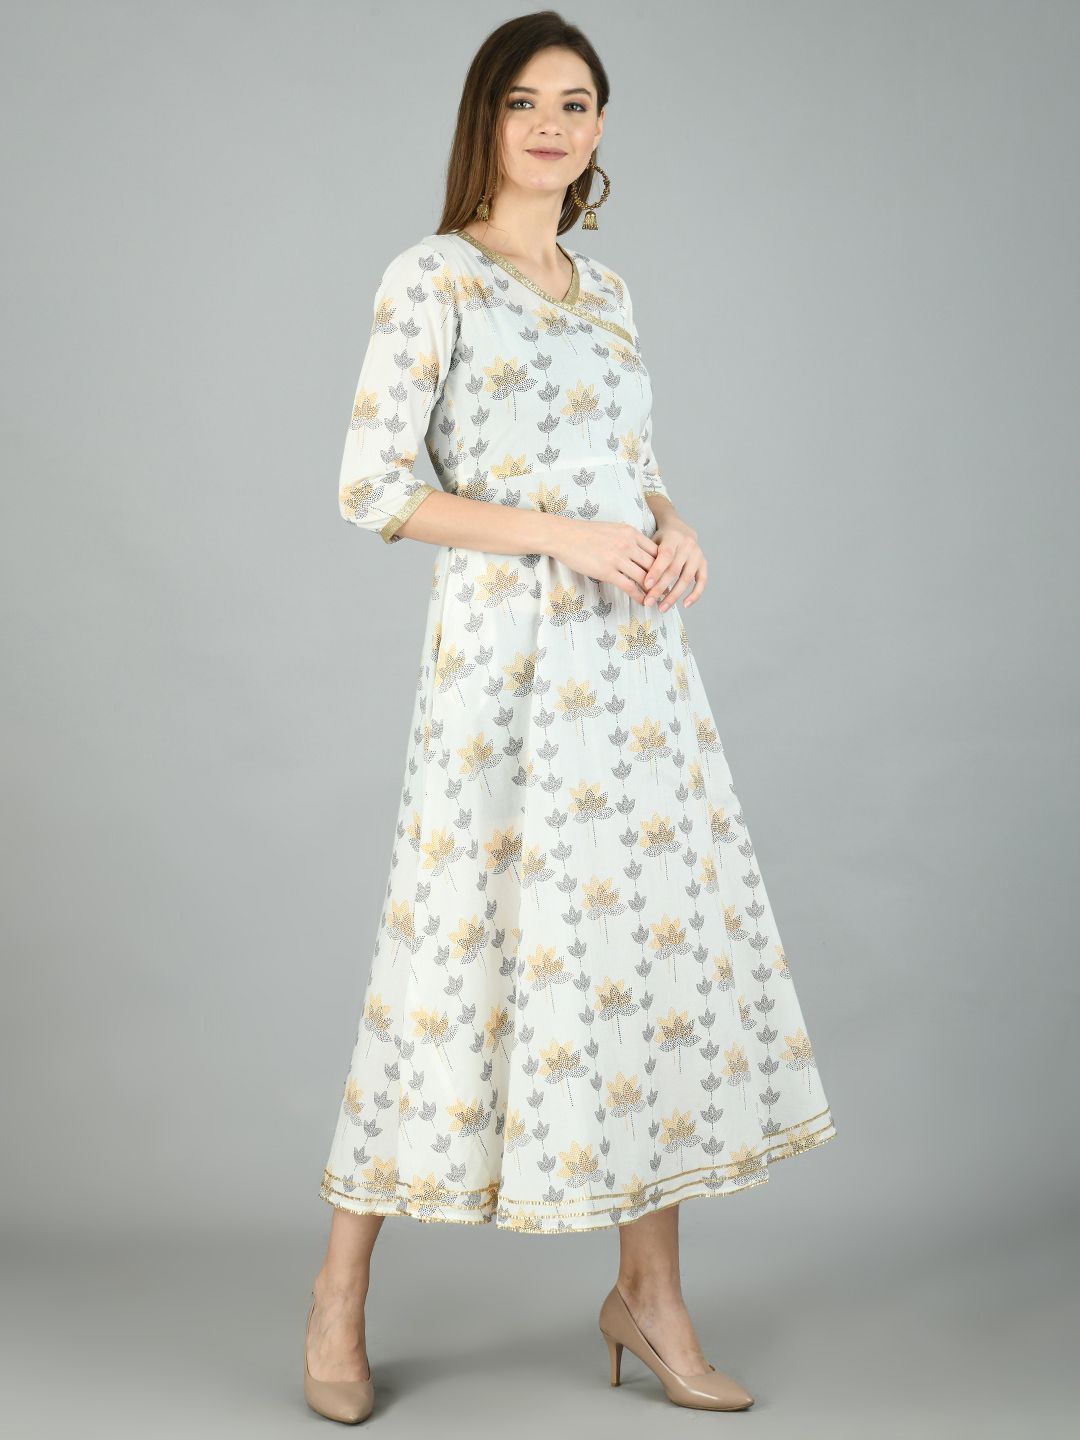 Women's Off White Cotton Printed 3/4 Sleeve V Neck Casual Dress - Myshka